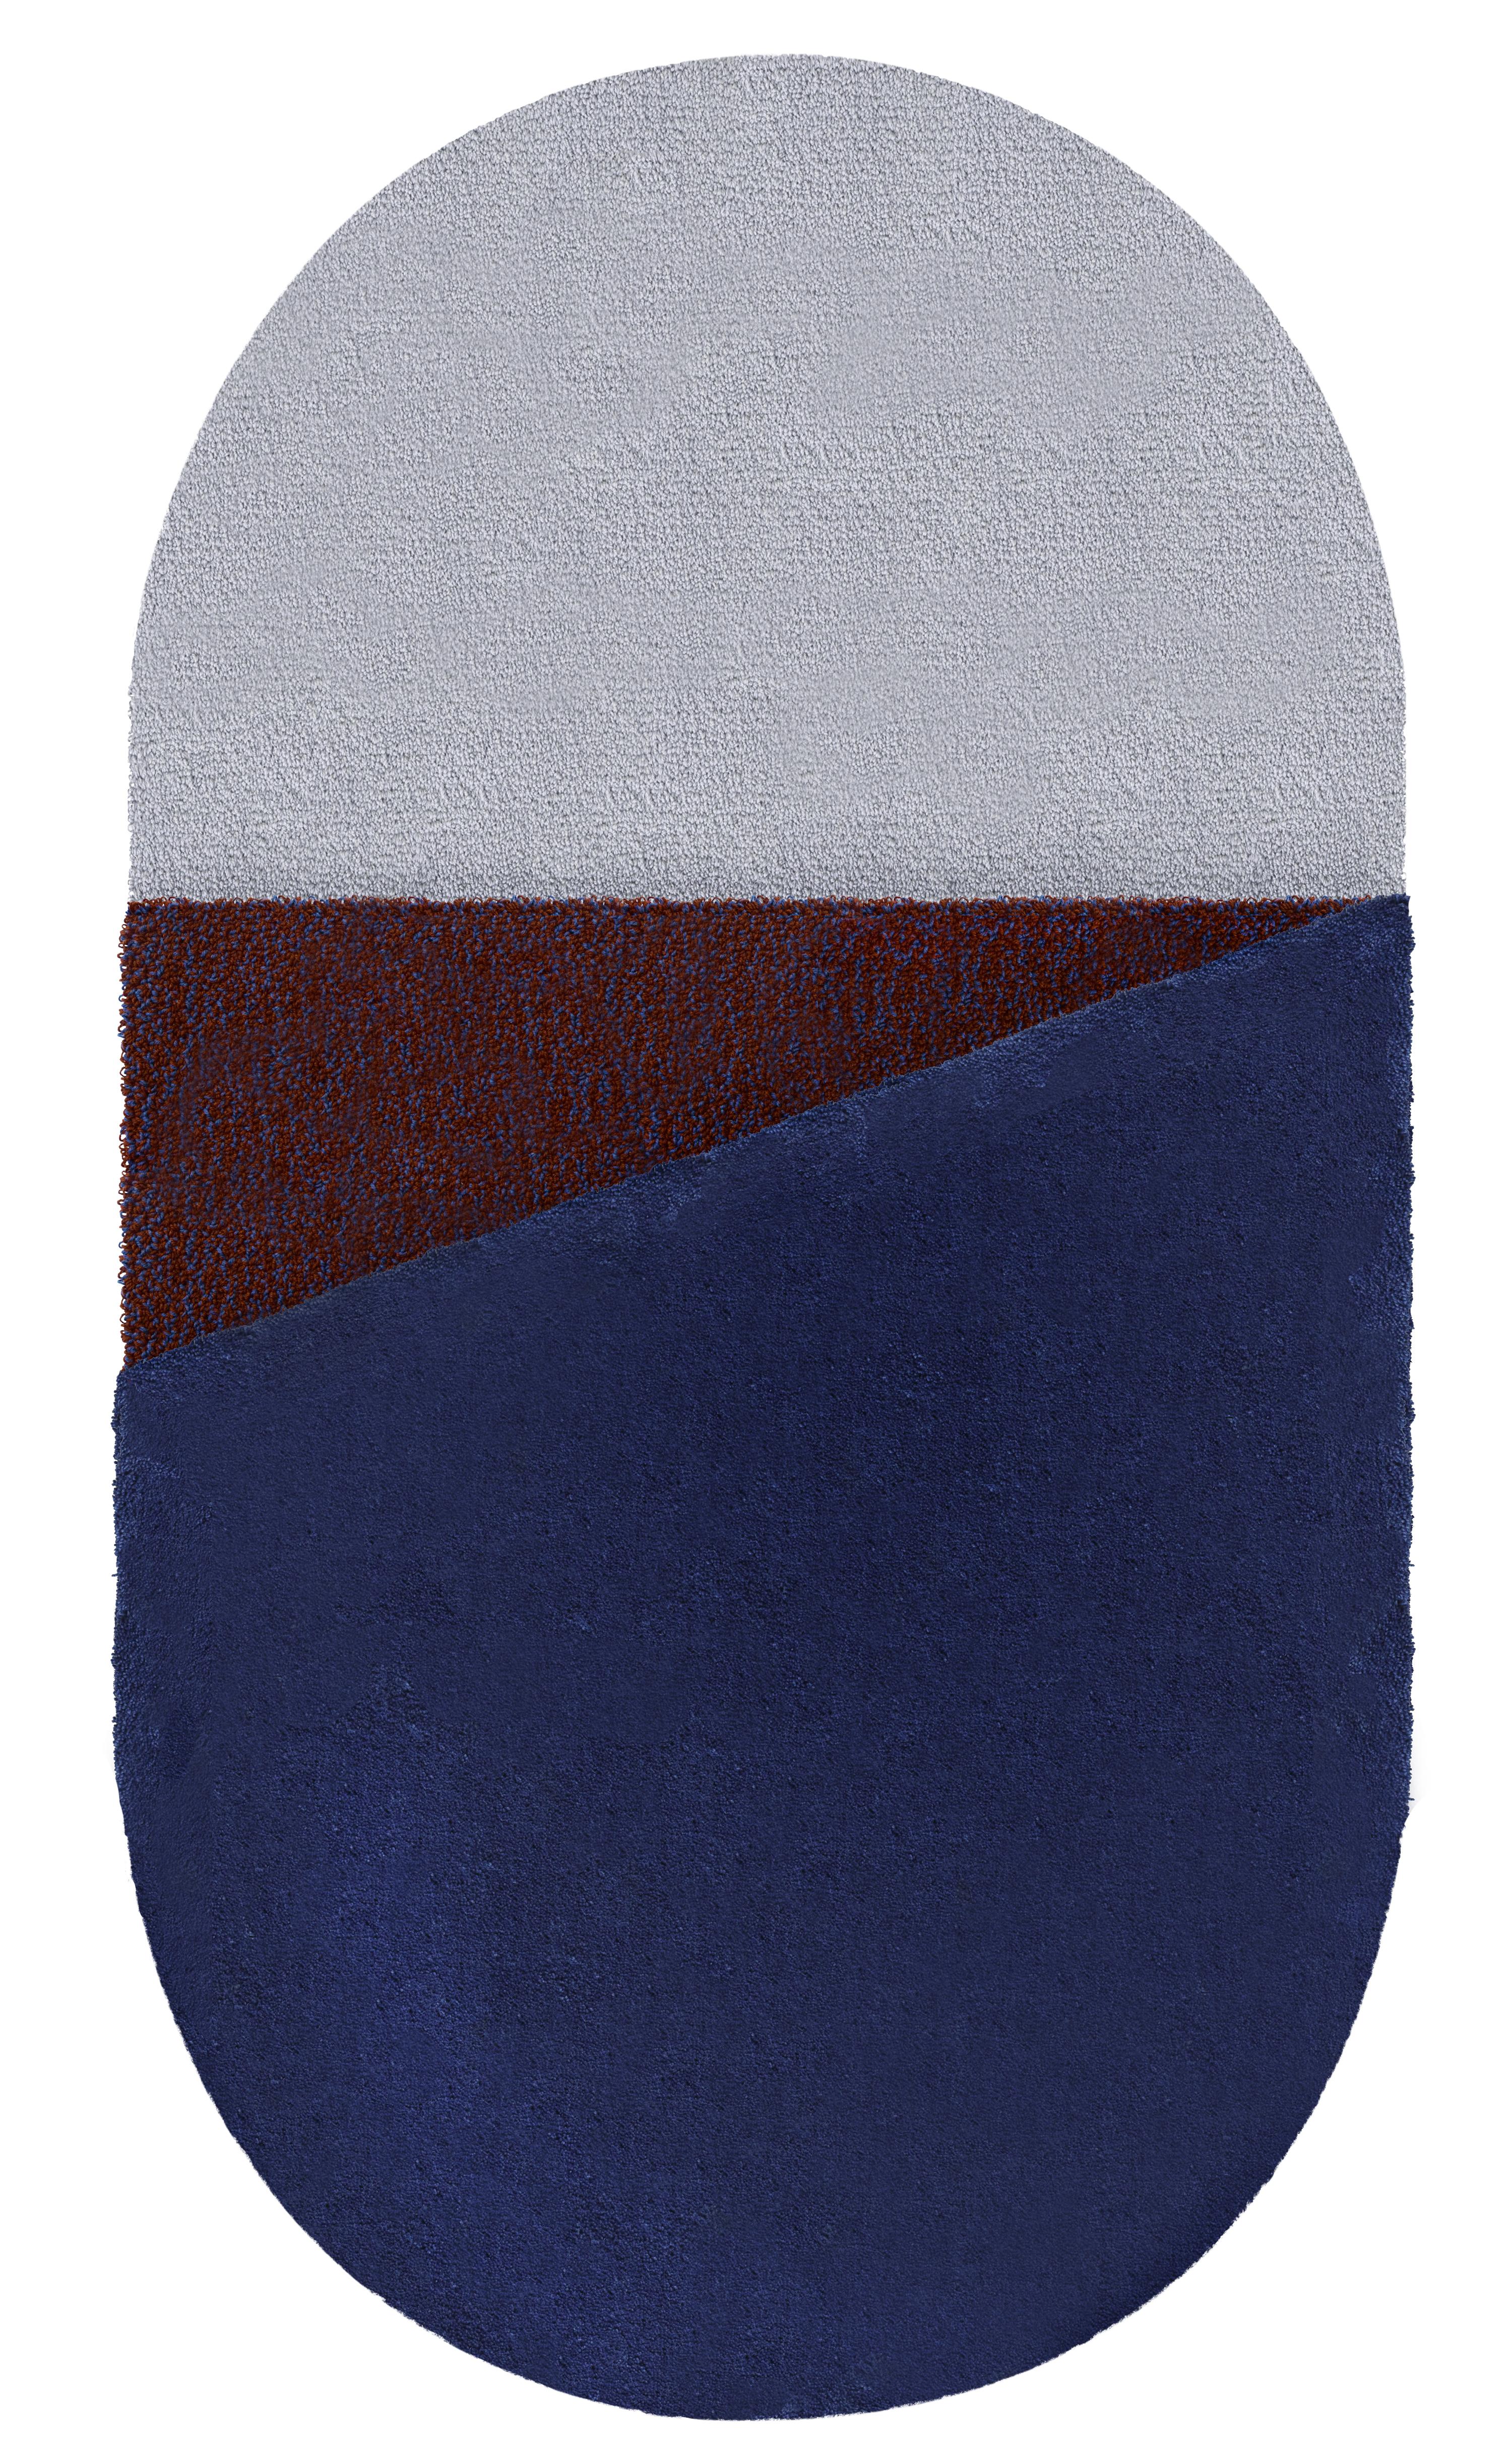 Contemporary Large Blue Oci Triptych Rug by Seraina Lareida For Sale